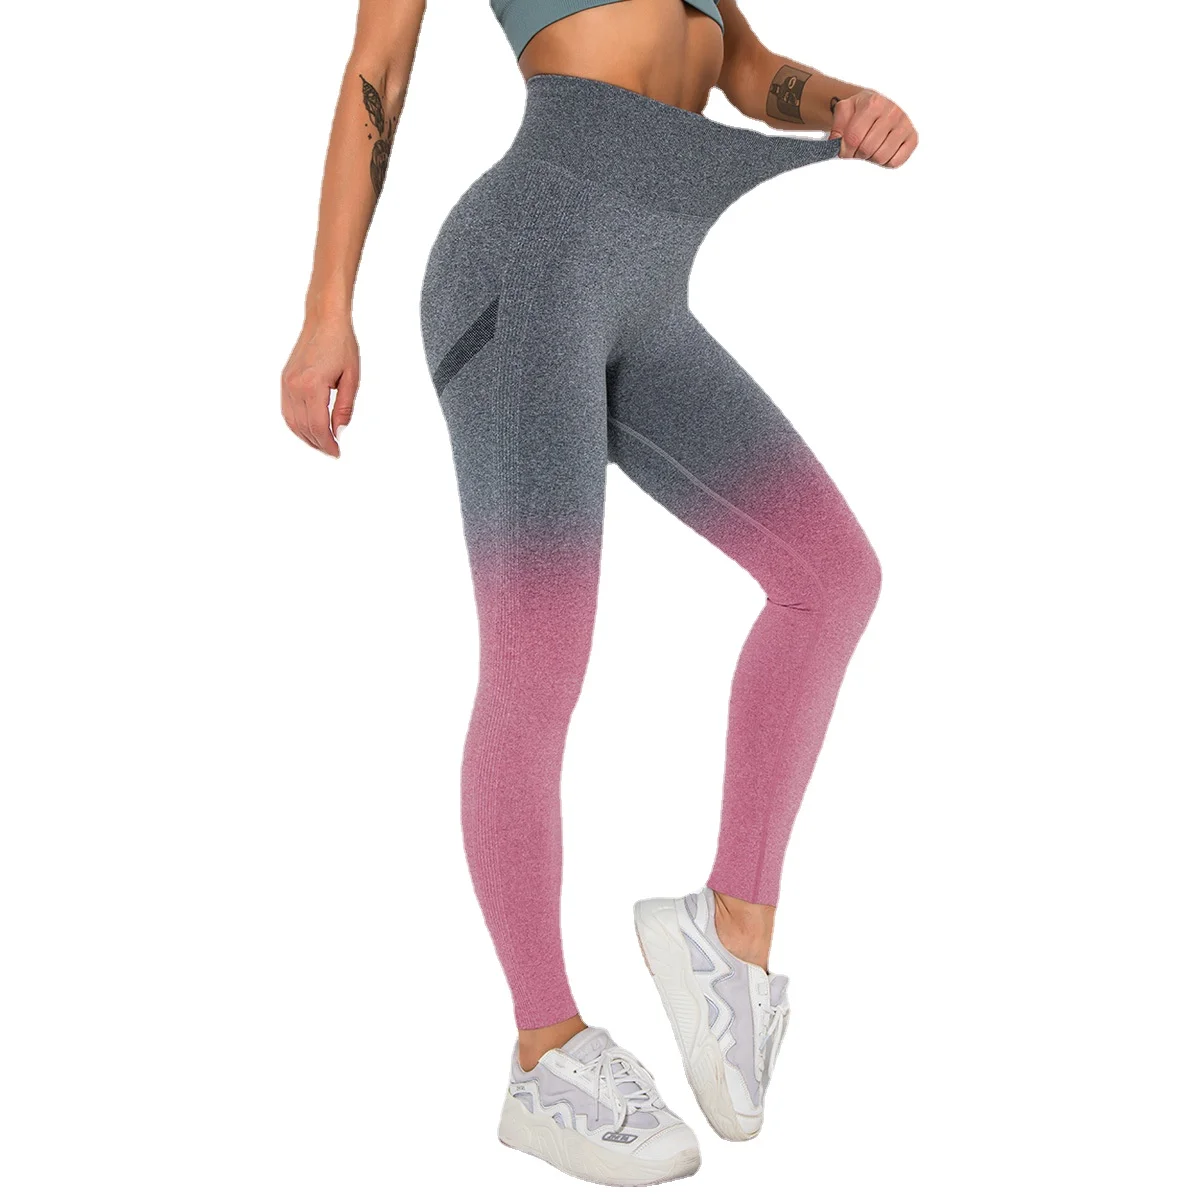 Seamless Gradient Yoga Pants Tie dye Leggings High Waist Leggins Sports Women Tights Fitness Gym Workout Sport Leggings Pants